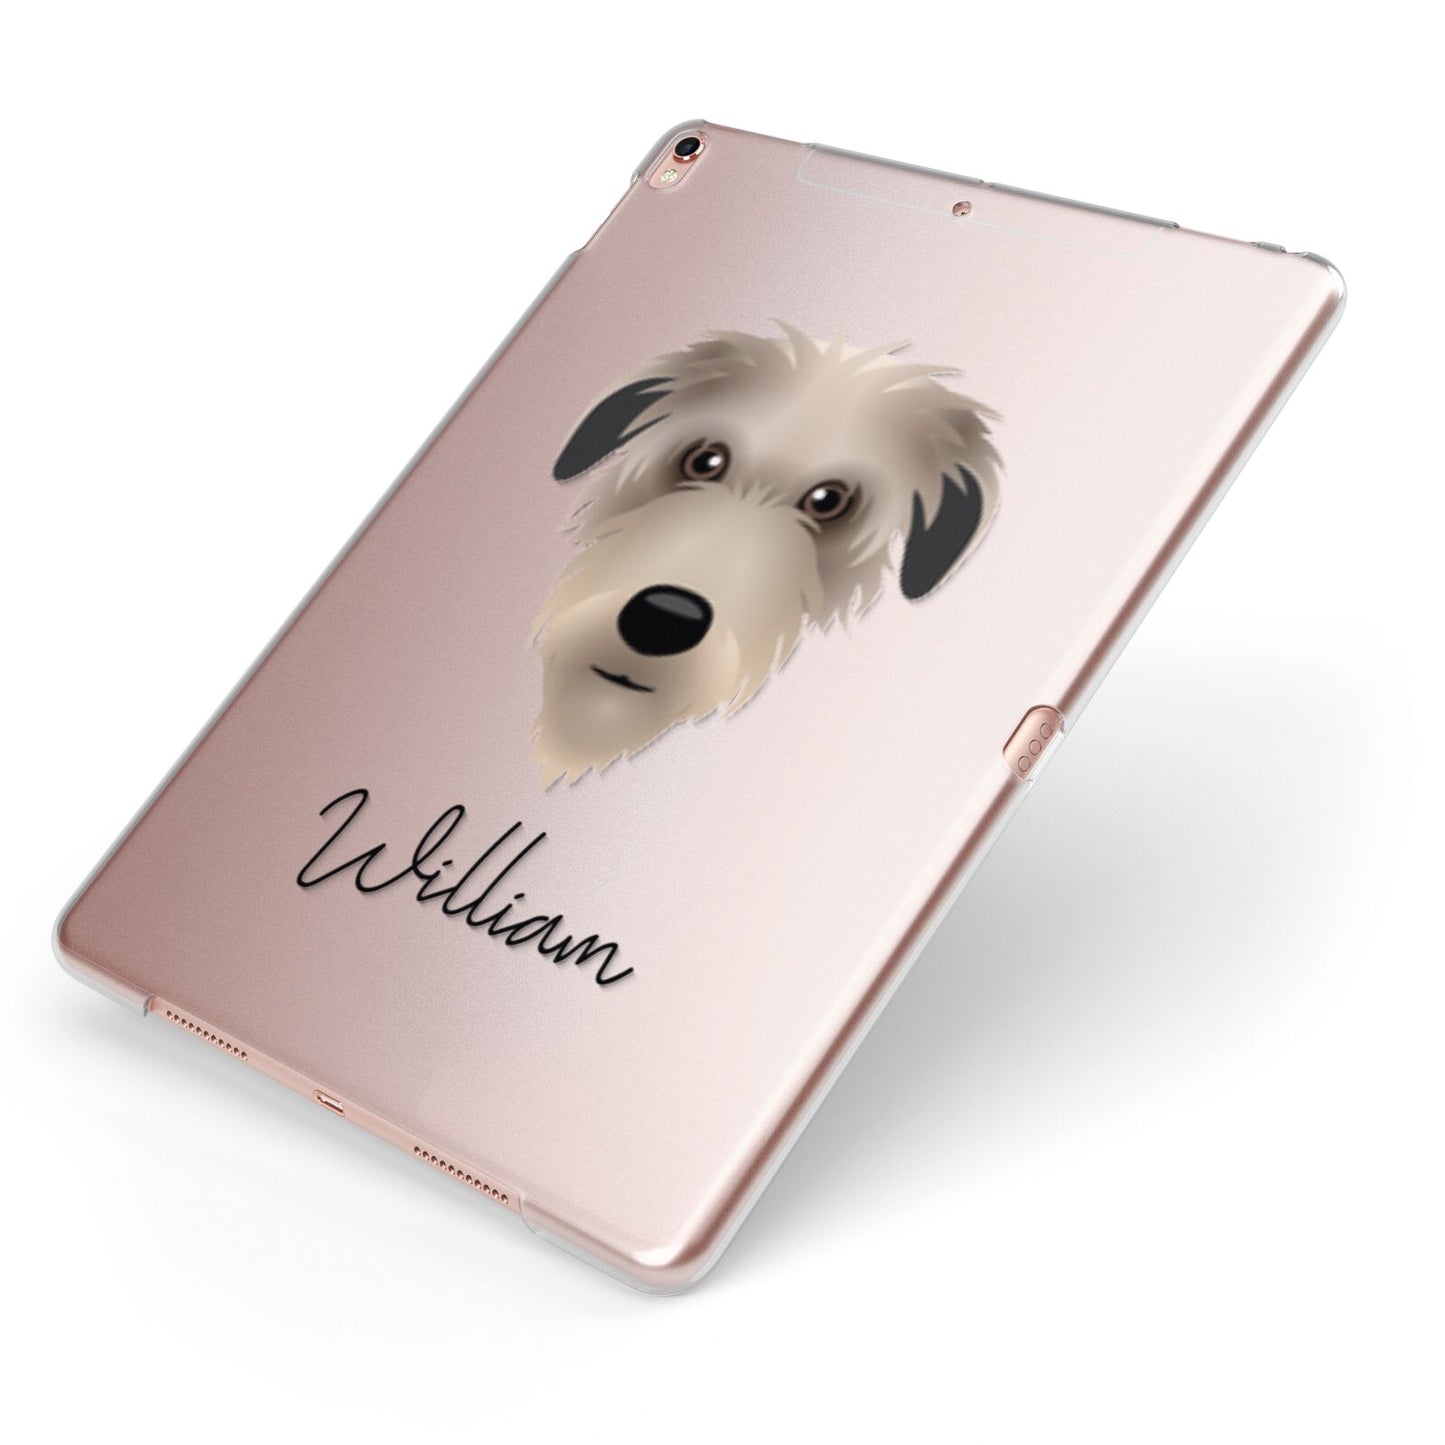 Deerhound Personalised Apple iPad Case on Rose Gold iPad Side View